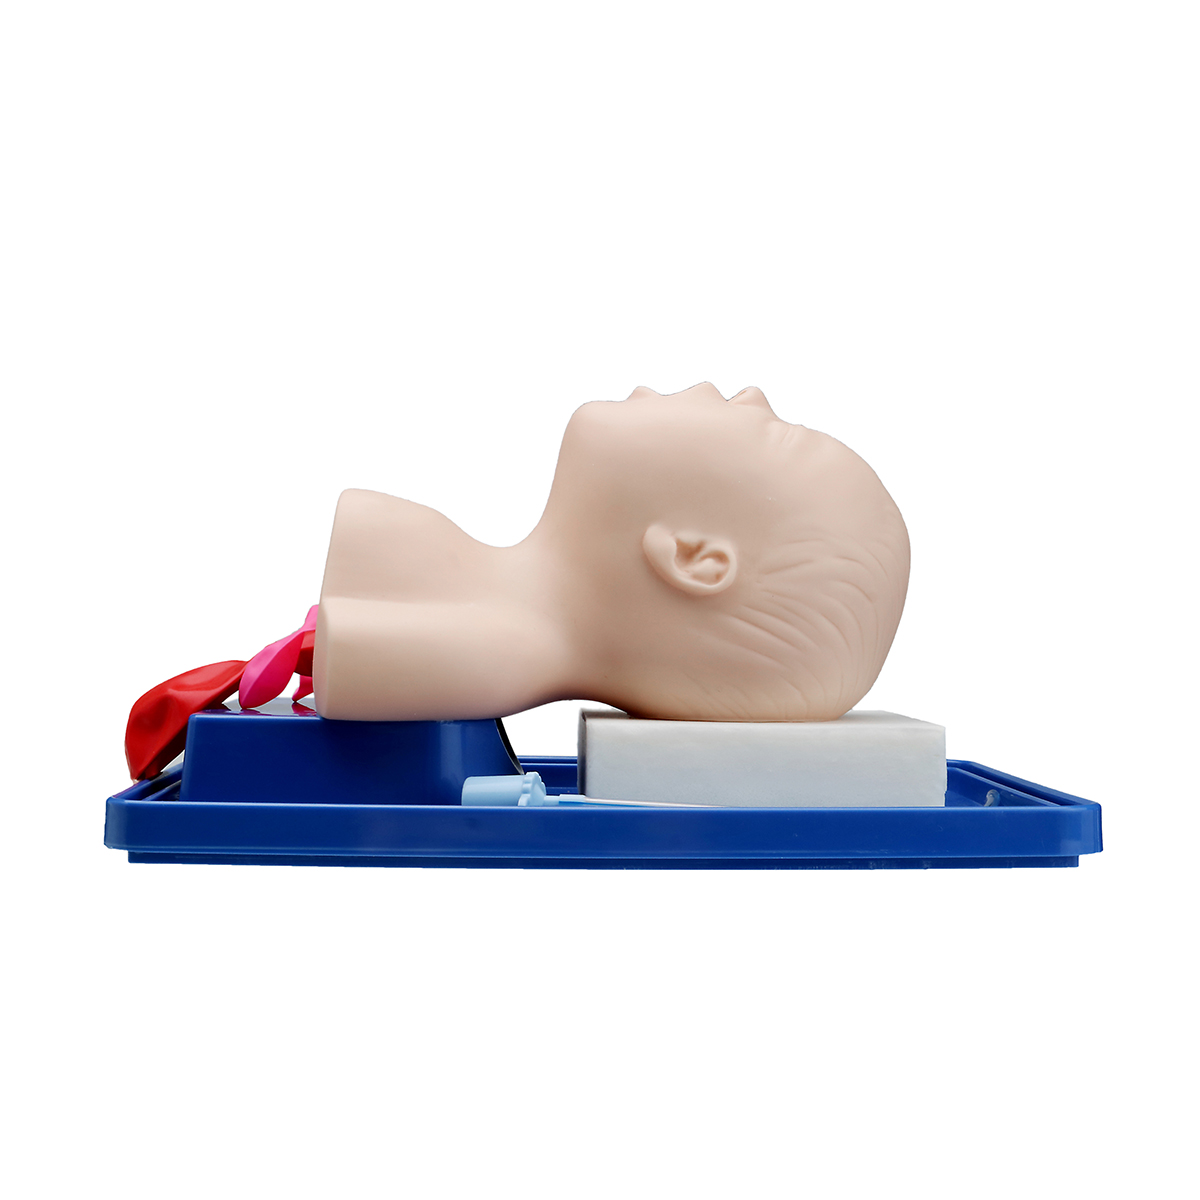 Intubation Manikin Study Teaching Model Baby Infant Airway Management Trainer Medical Model 54